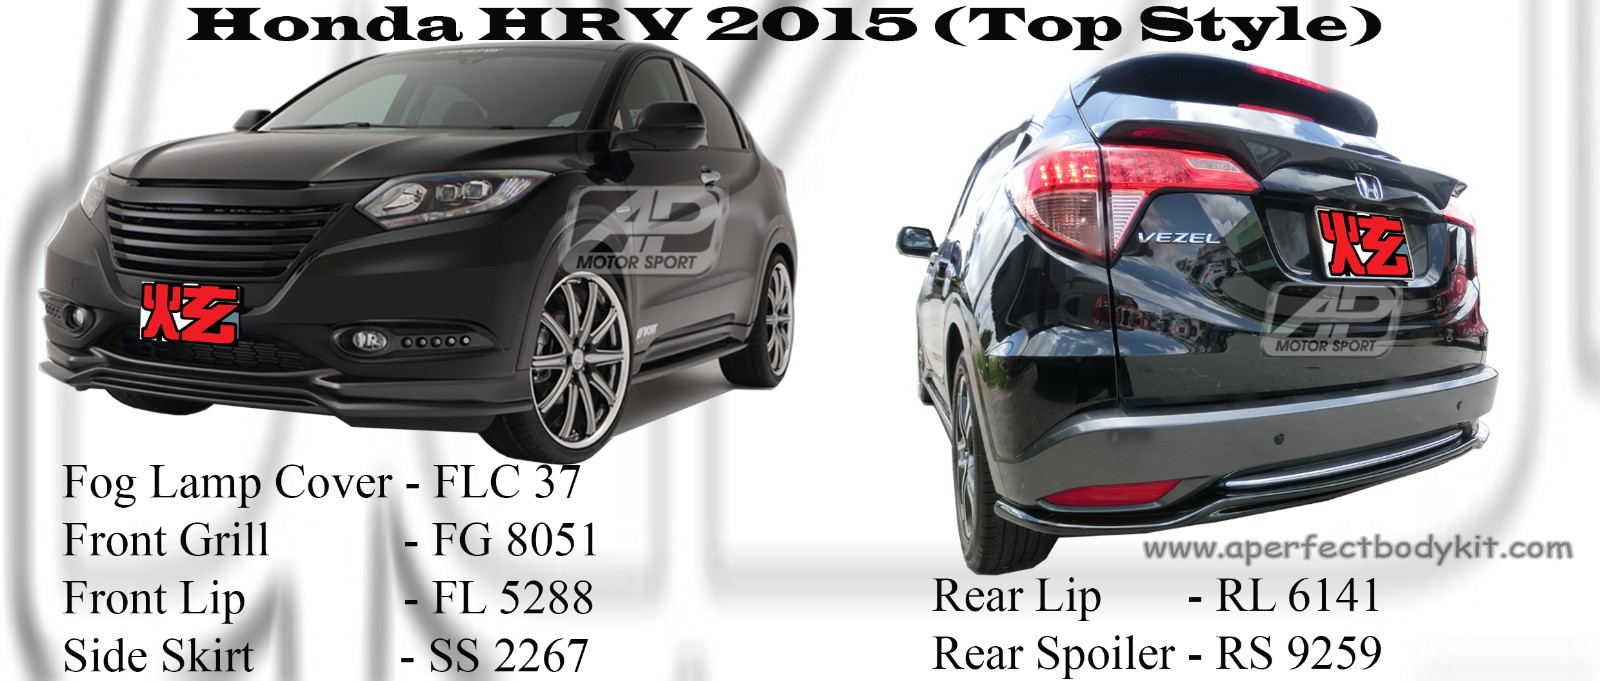 Honda HRV / Vezel Top Style Bodykits 